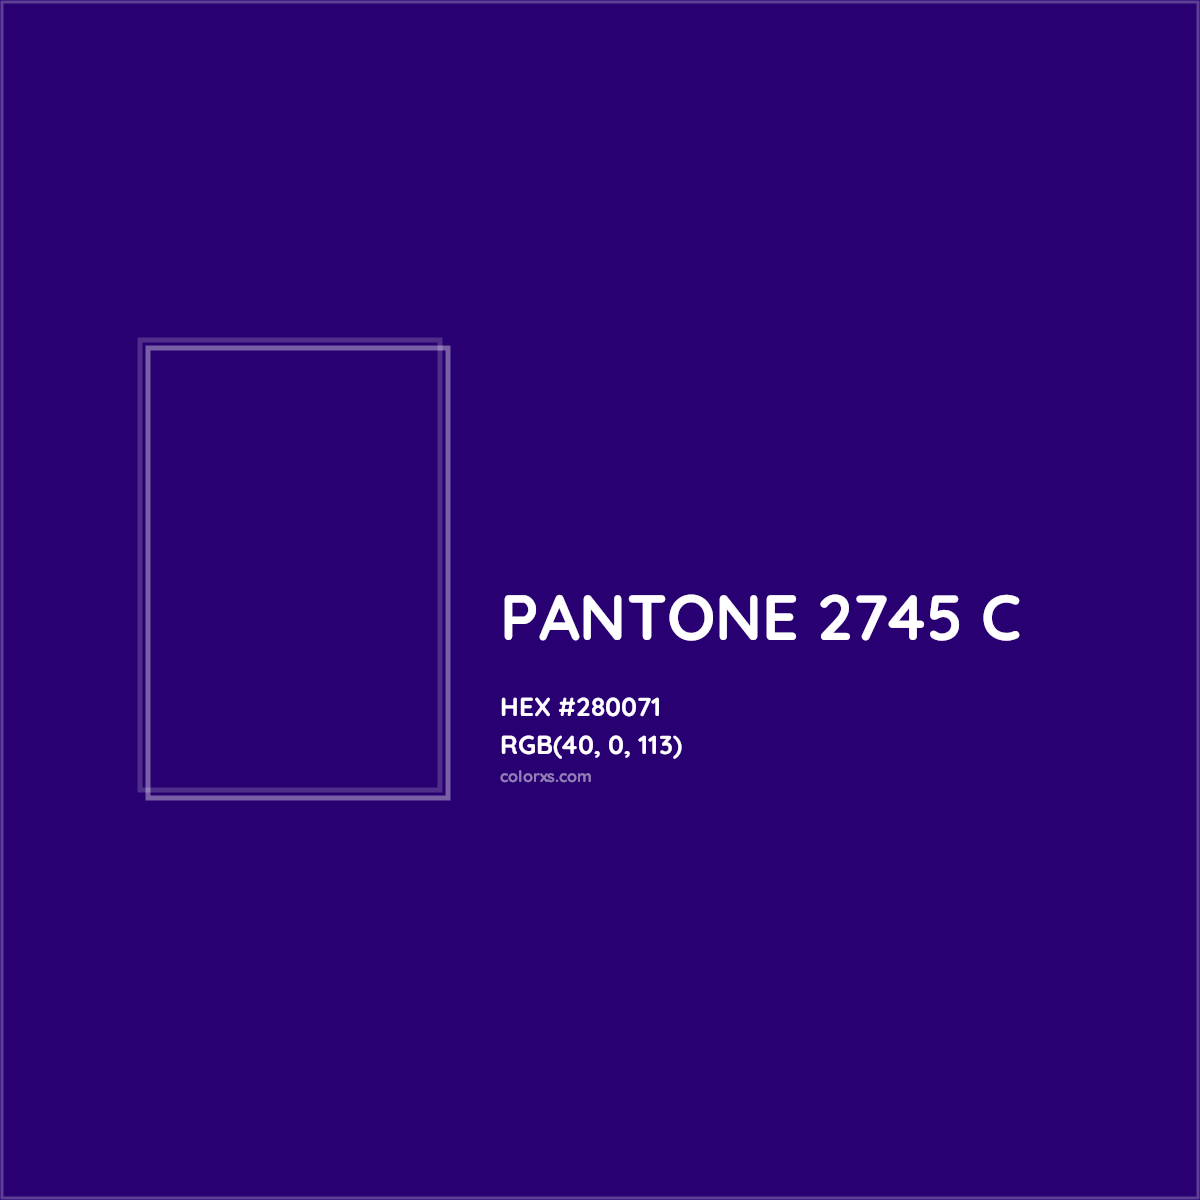 HEX #280071 PANTONE 2745 C CMS Pantone PMS - Color Code